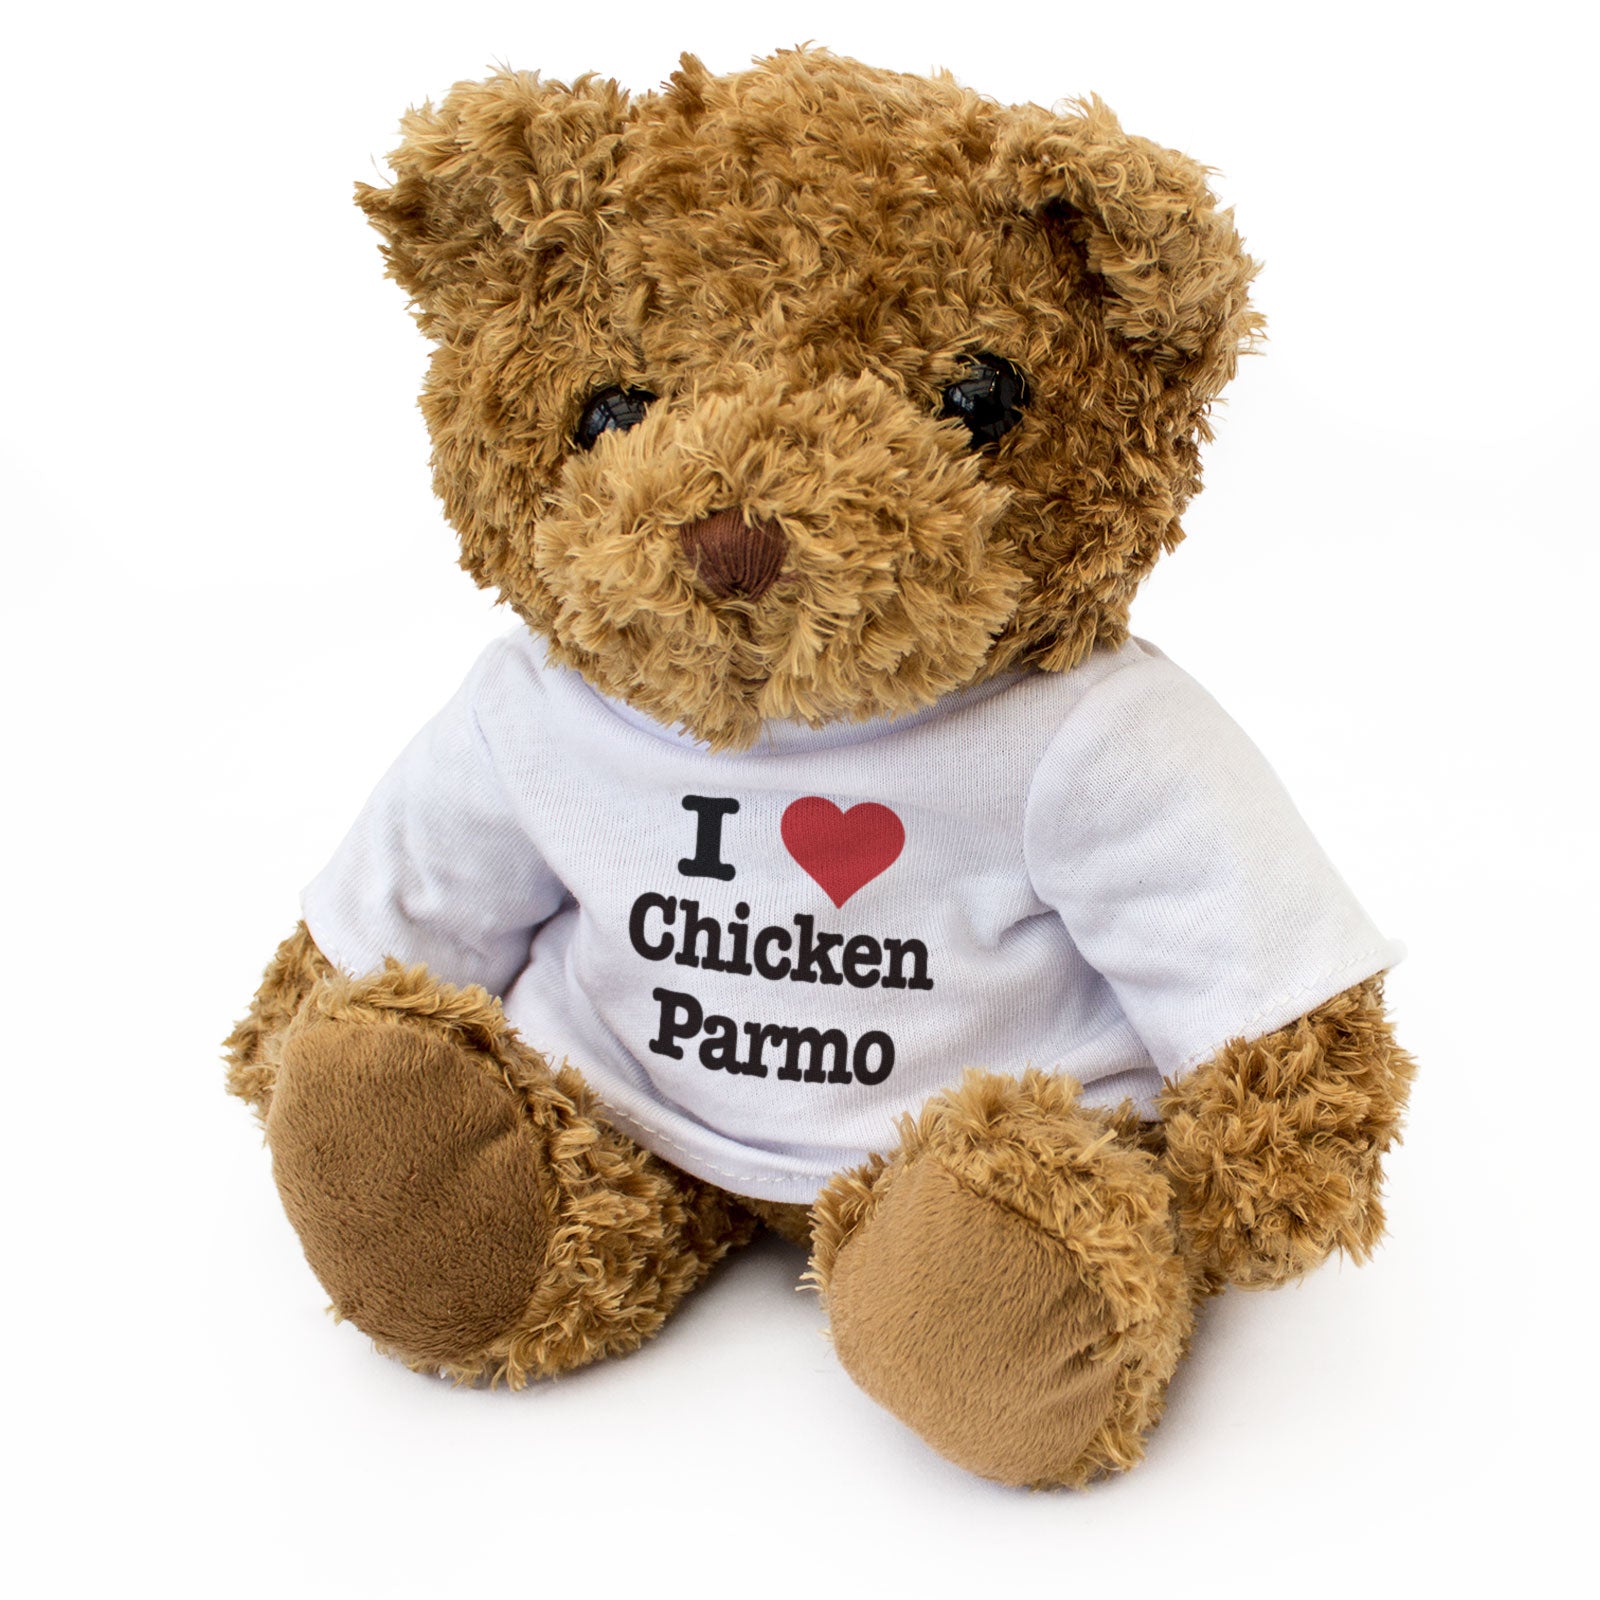 I Love Chicken Parmo - Teddy Bear